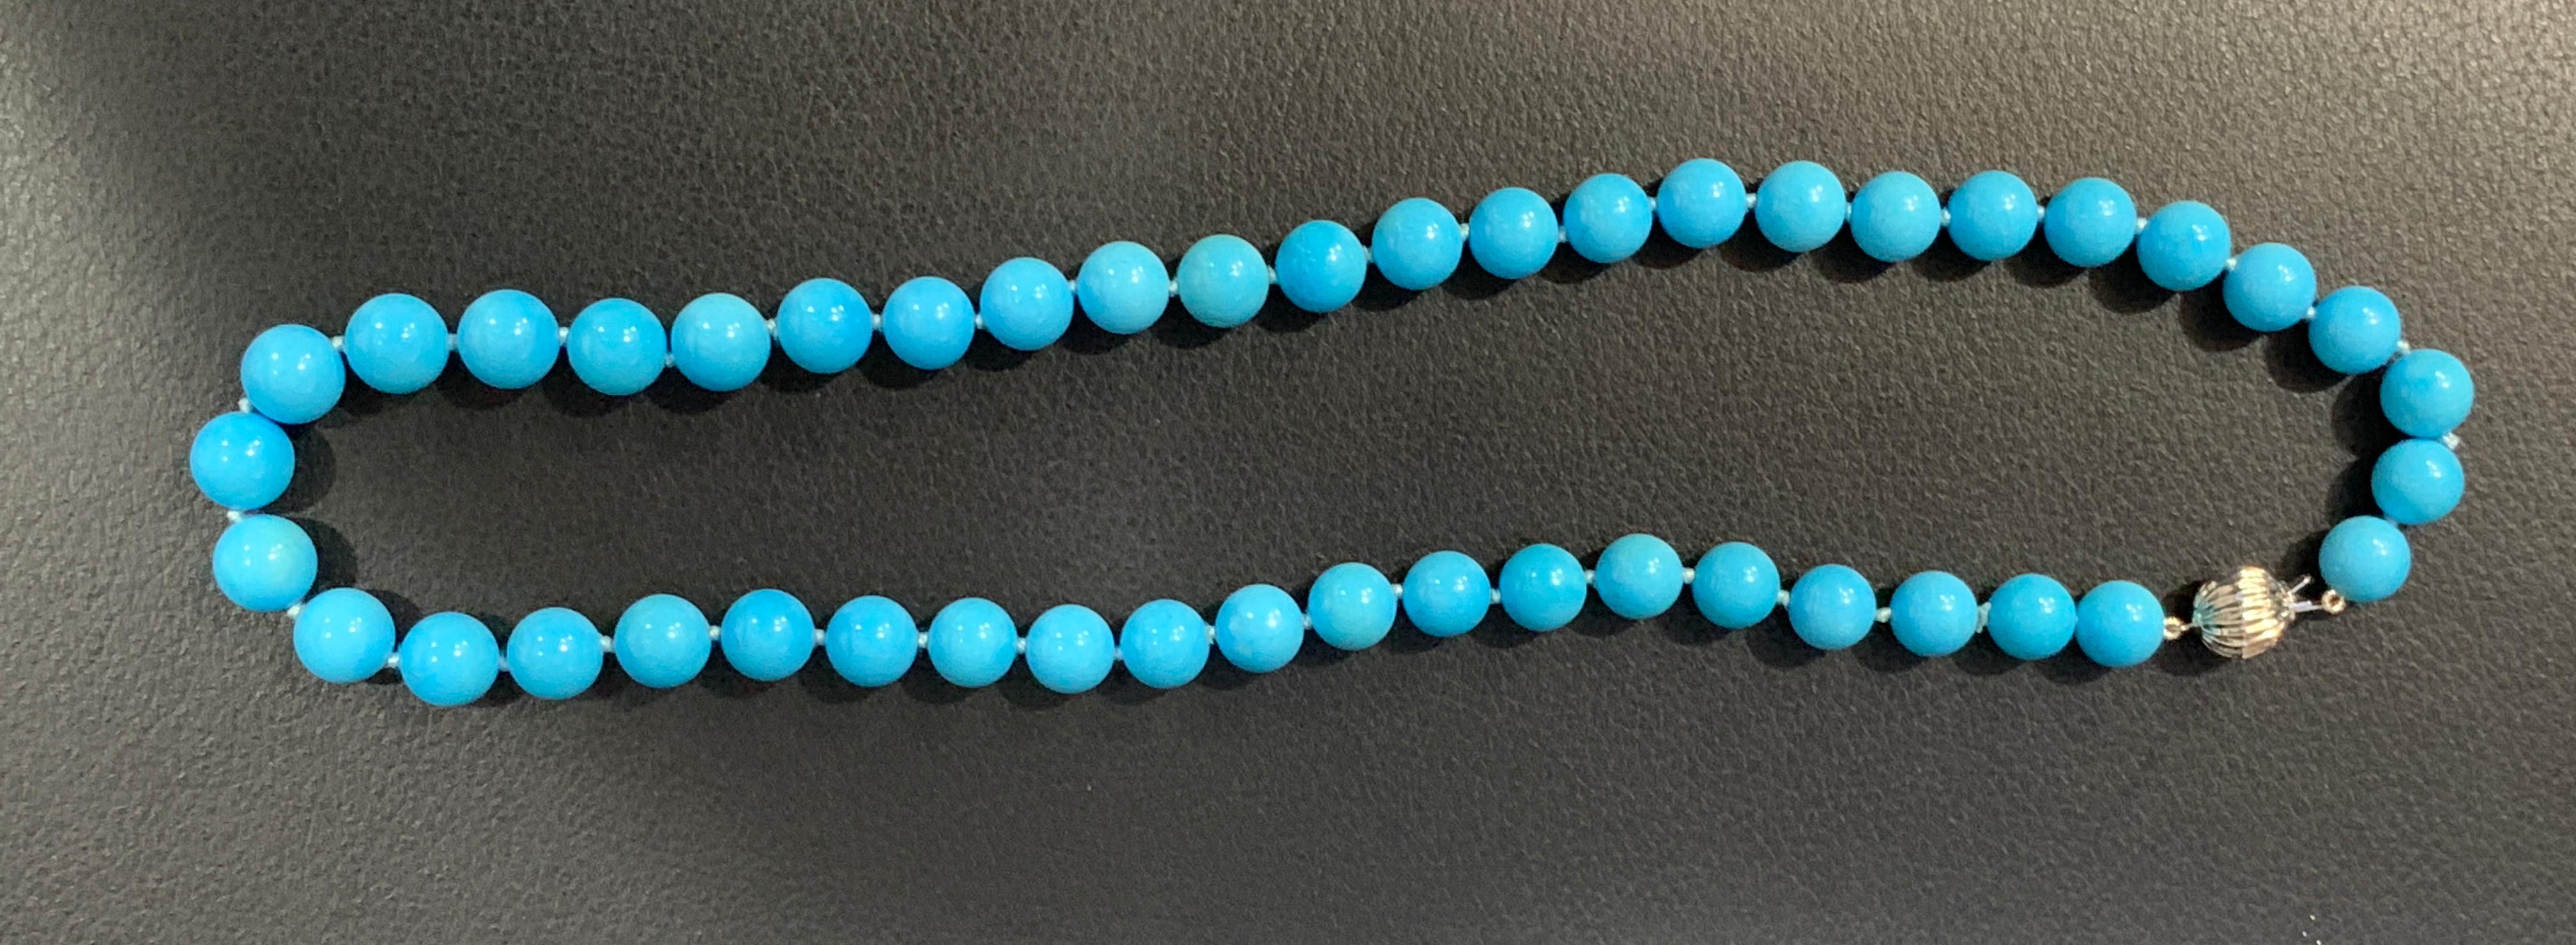 sleeping beauty turquoise bead necklace